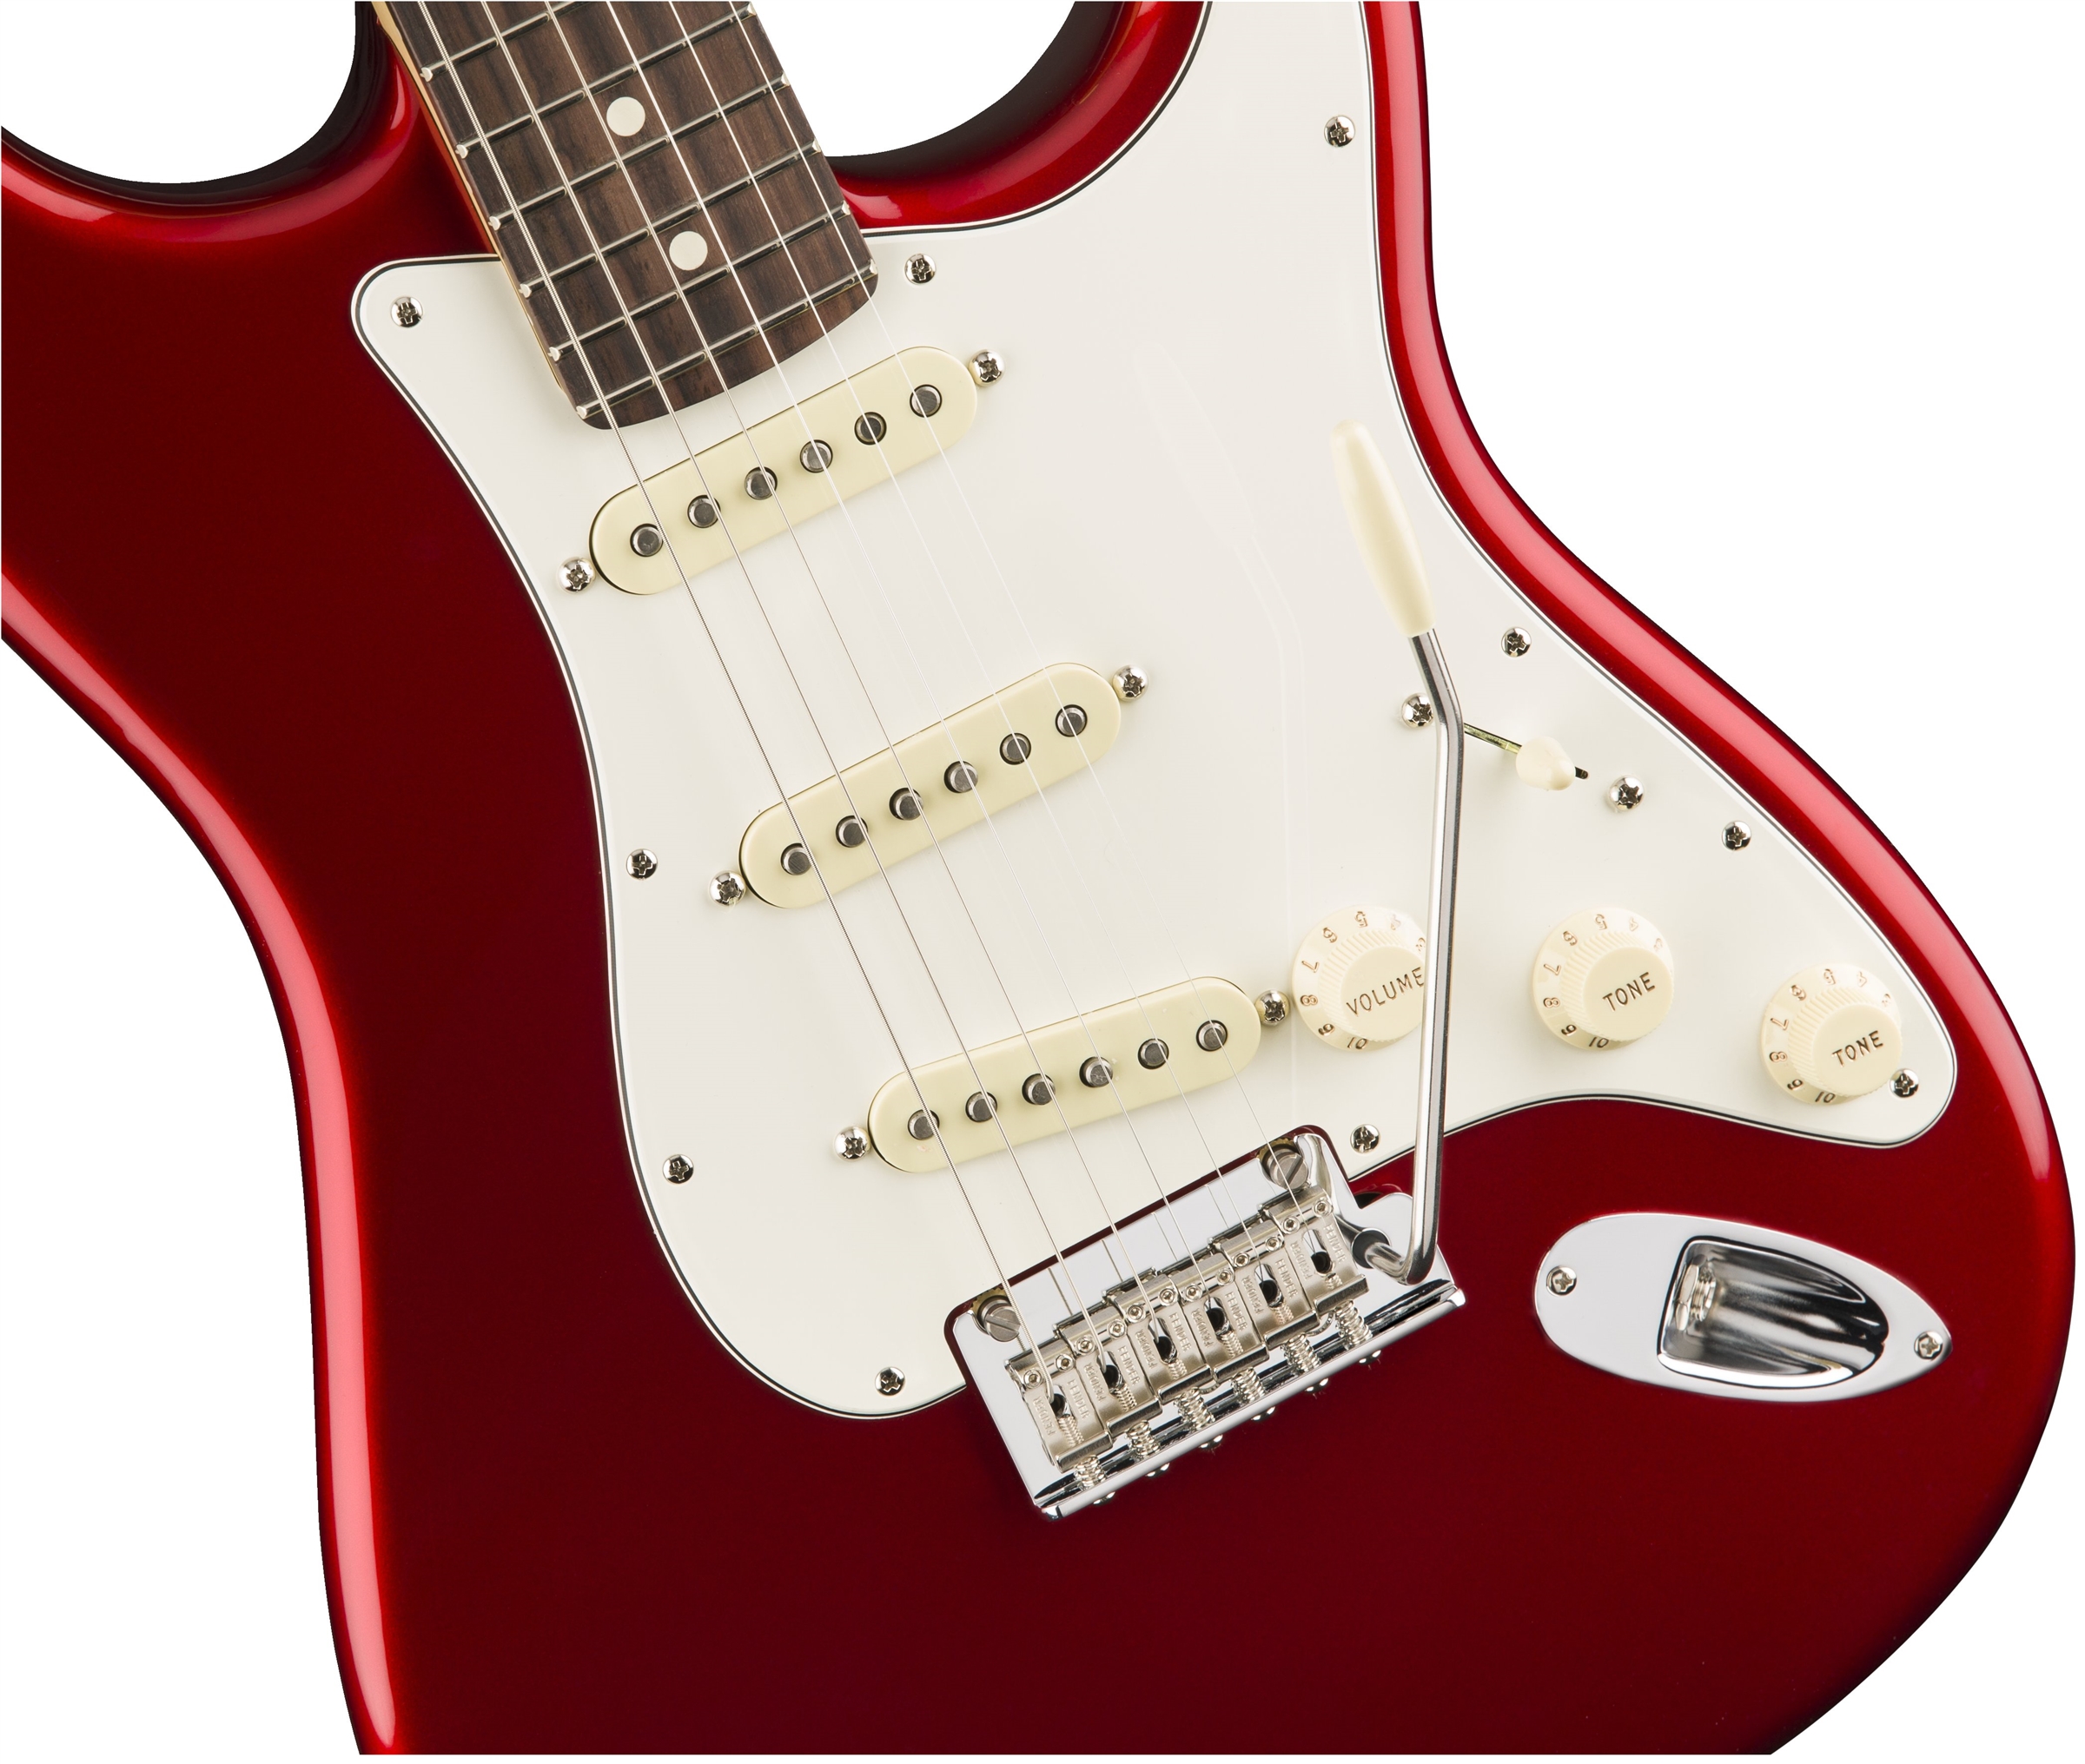 Электрогитара hss. Электрогитара Fender American professional Stratocaster. Электрогитара Fender Stratocaster красный. Электрогитара Squier Standard Stratocaster White. Электрогитара Fender Squier Vintage modified Stratocaster RW Metallic Red.